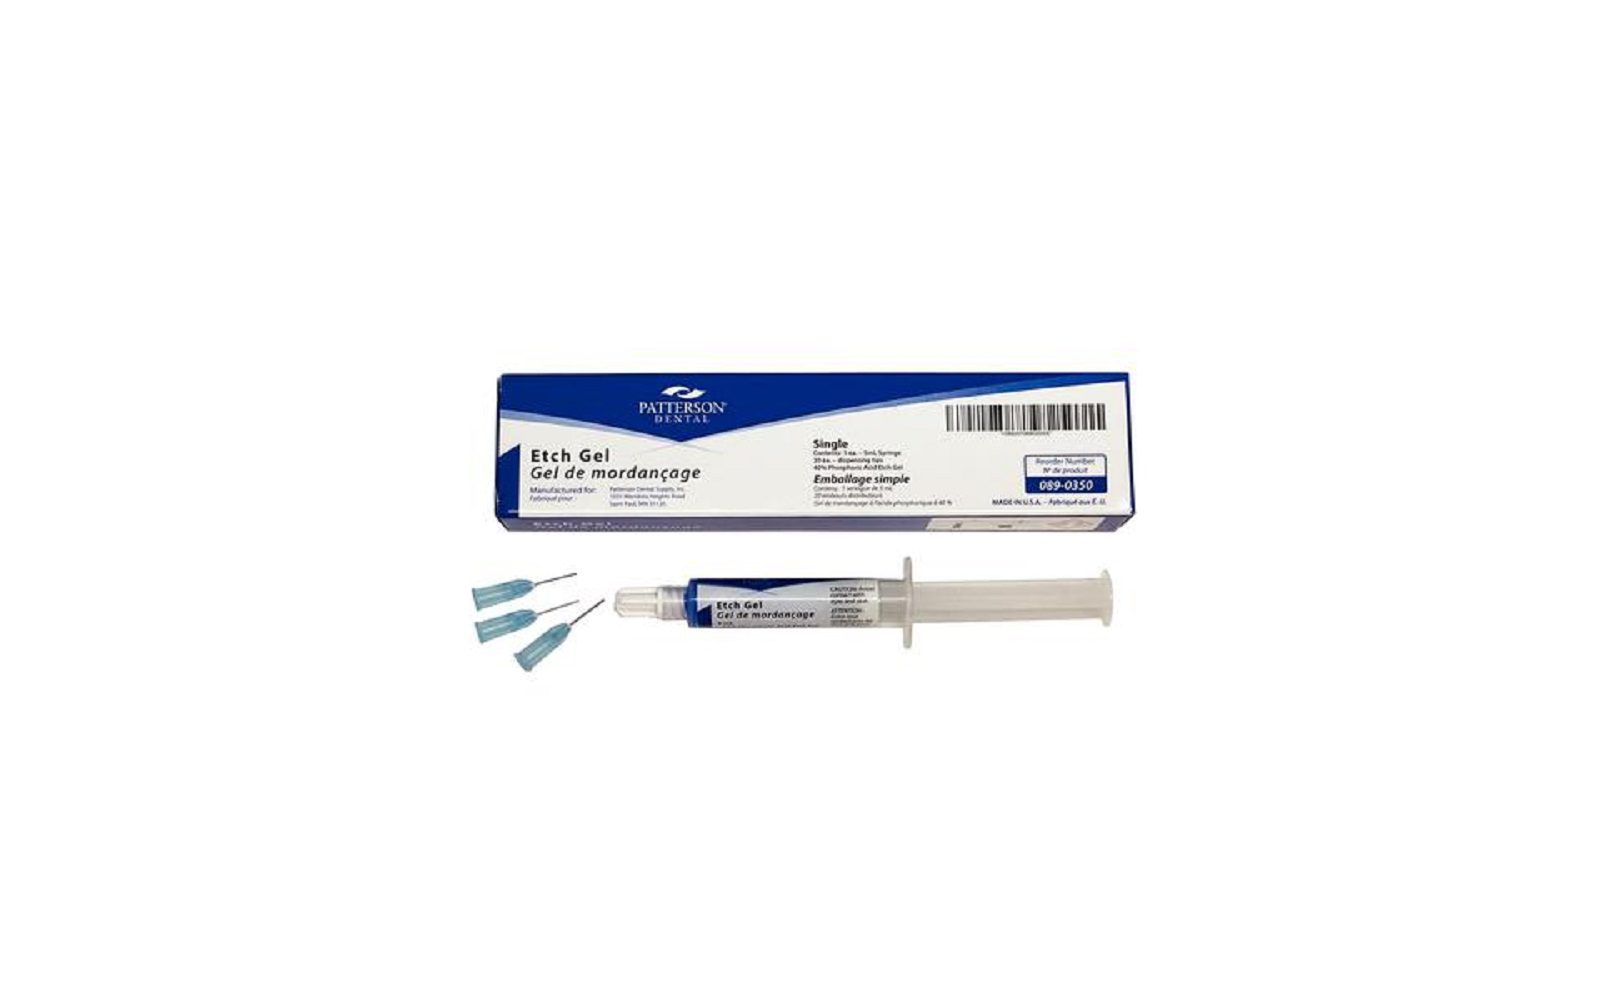 Patterson® 40% phosphoric acid etch gel syringe packs with tips - patterson dental supply